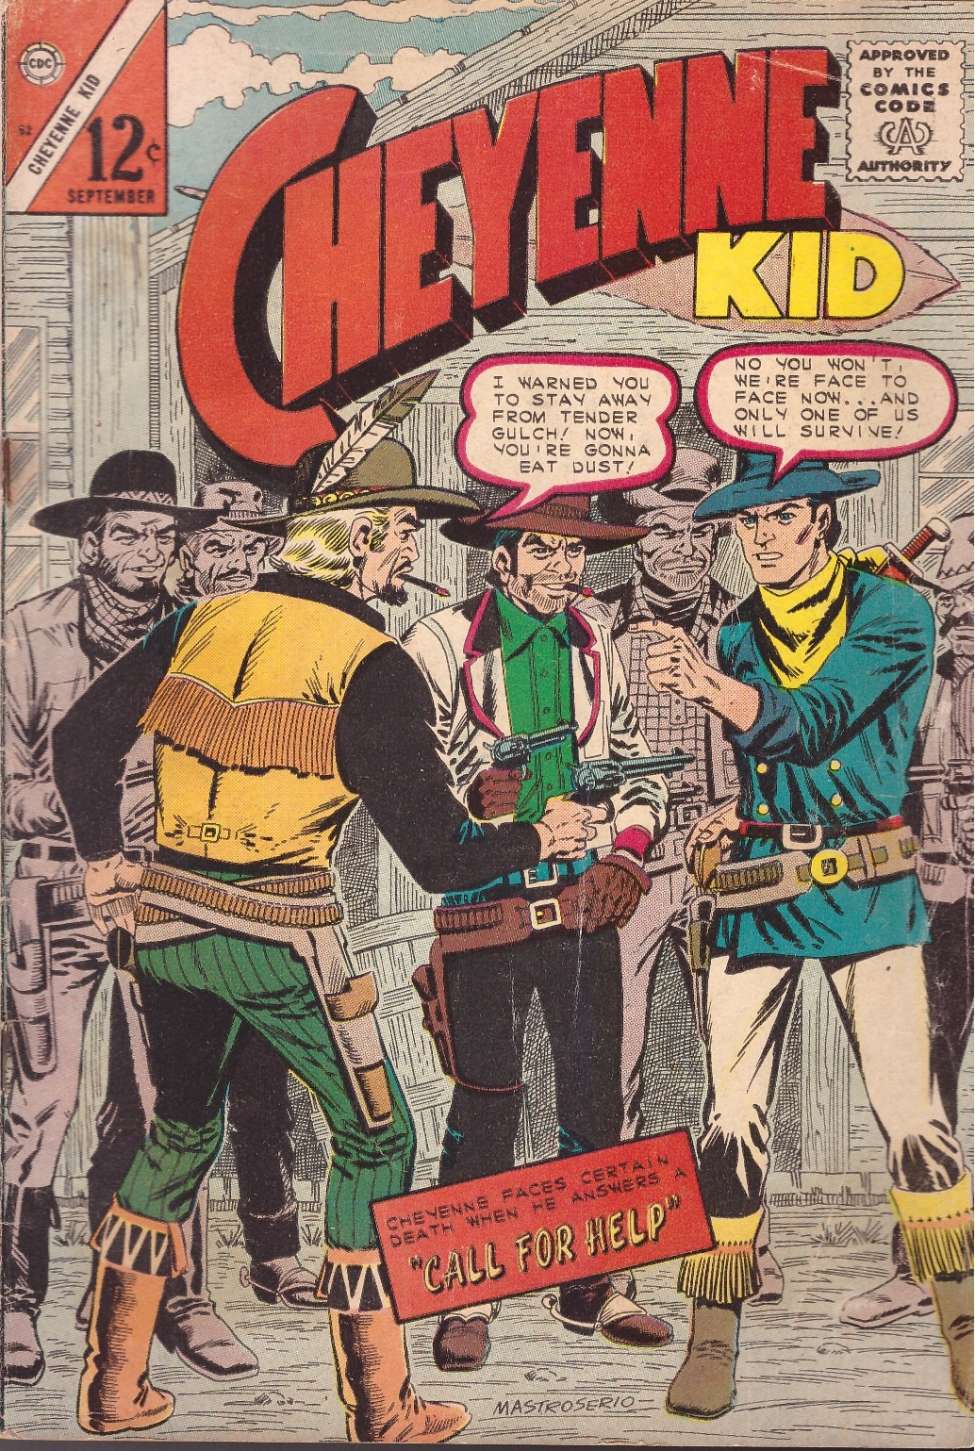 Comic Book Cover For Cheyenne Kid 52